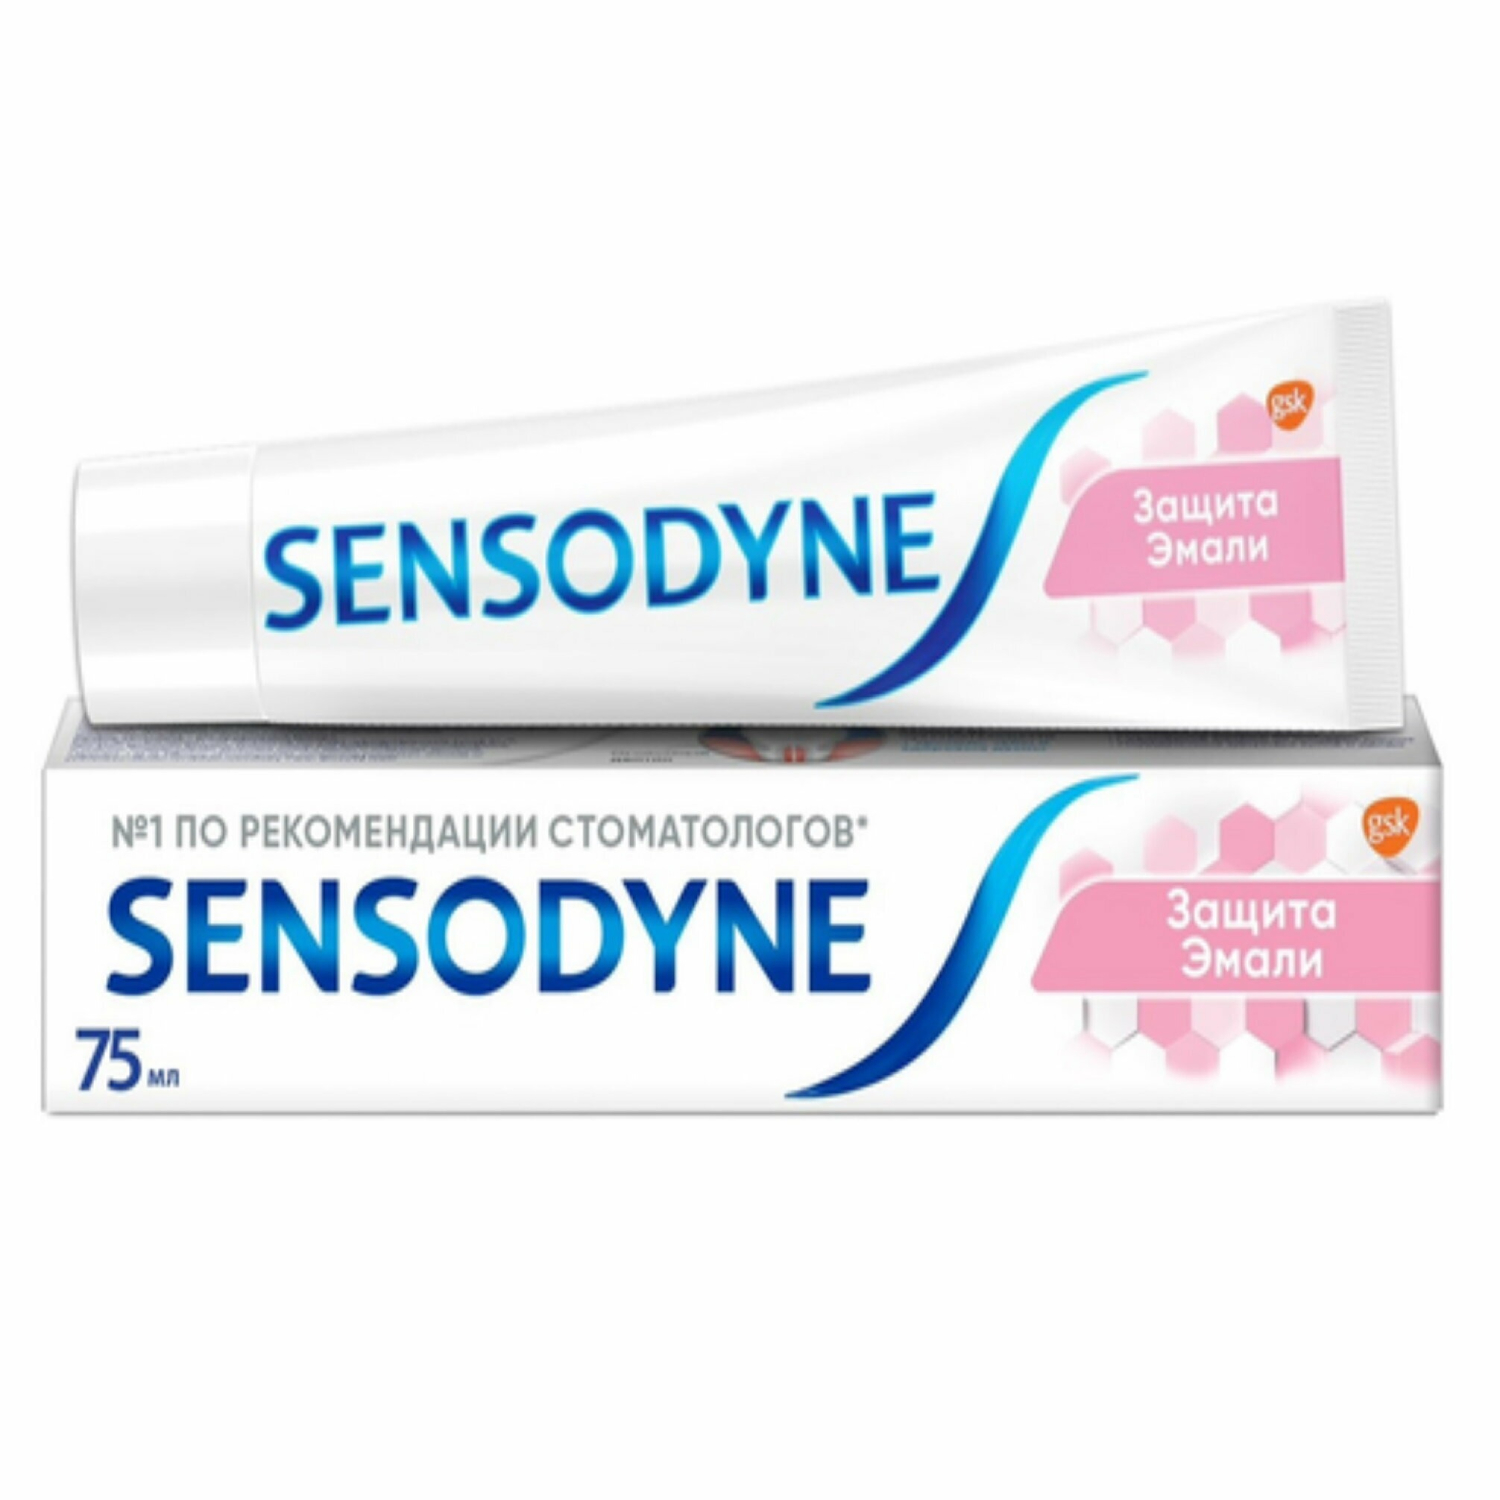 Зубная паста Sensodyne Защита эмали 75 мл sensodyne зубная паста мгновенный эффект